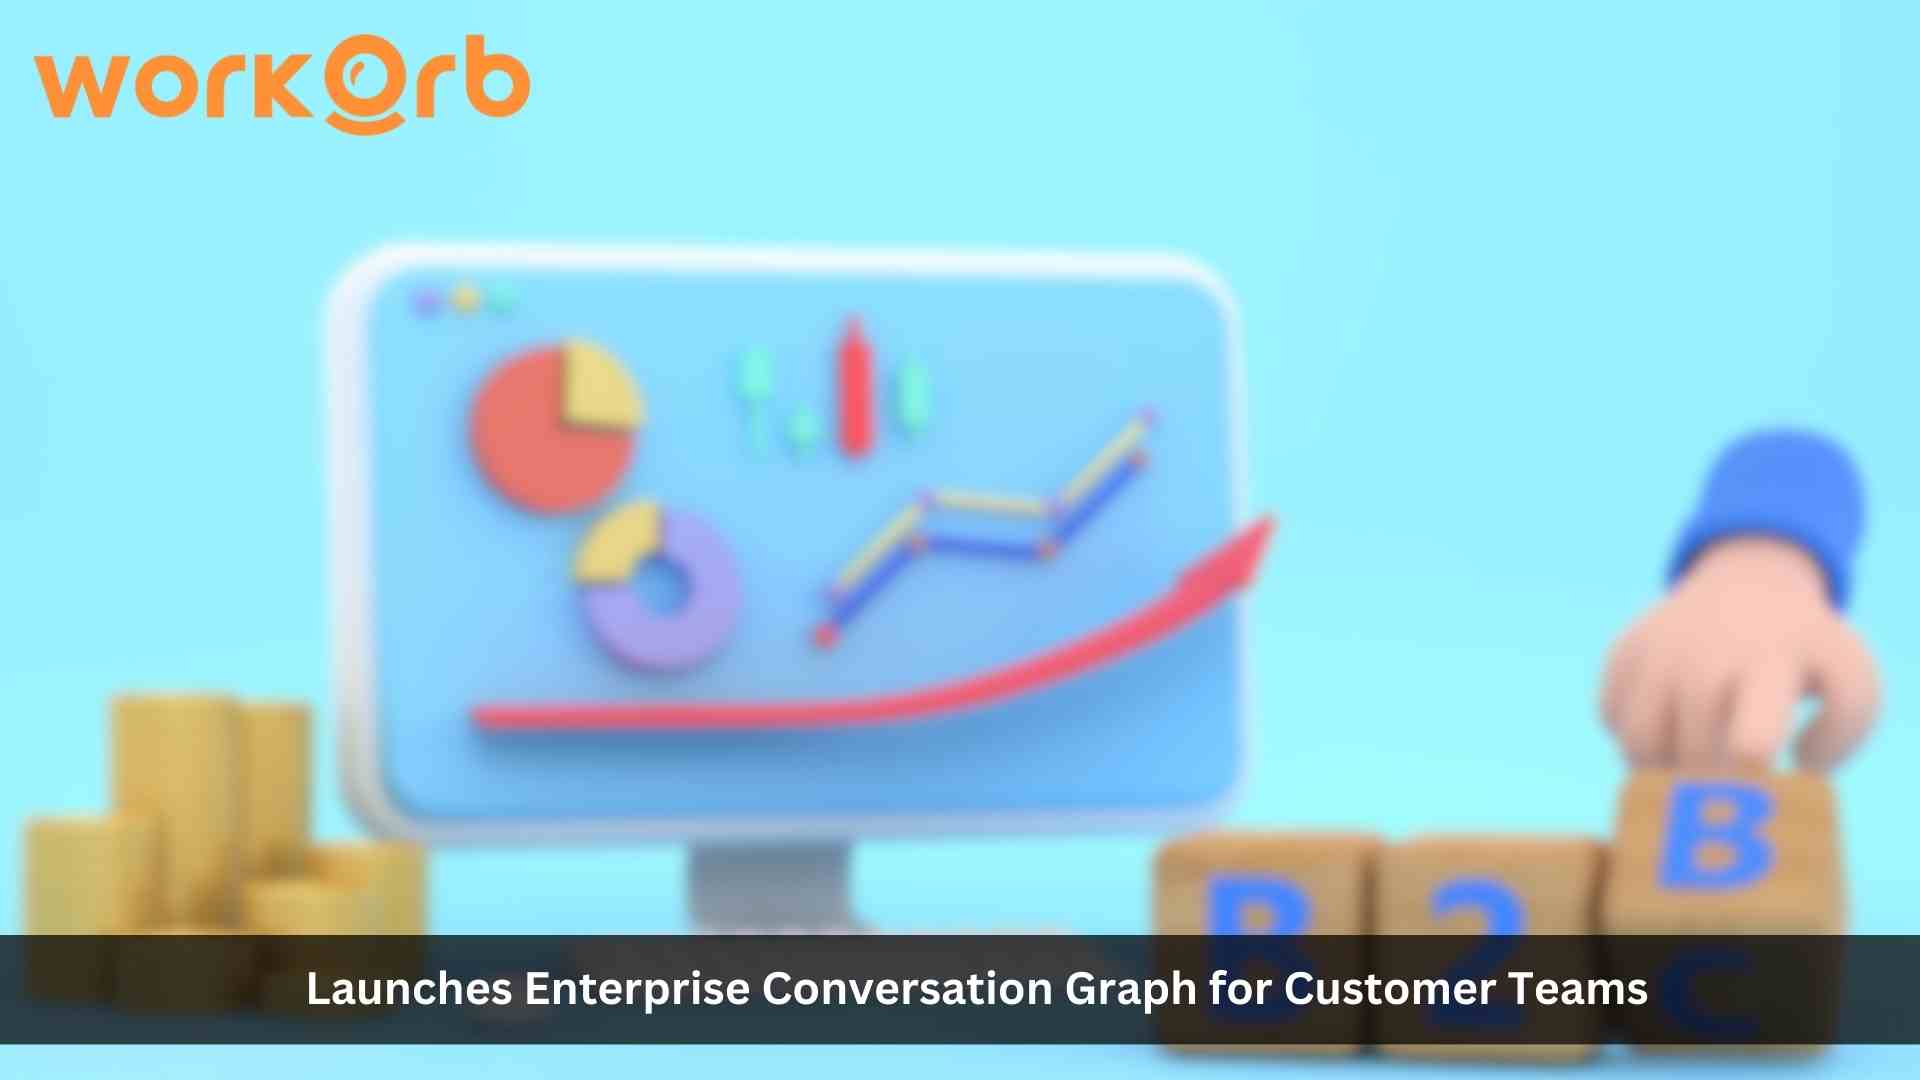 Workorb Launches Enterprise Conversation Graph for Customer Teams